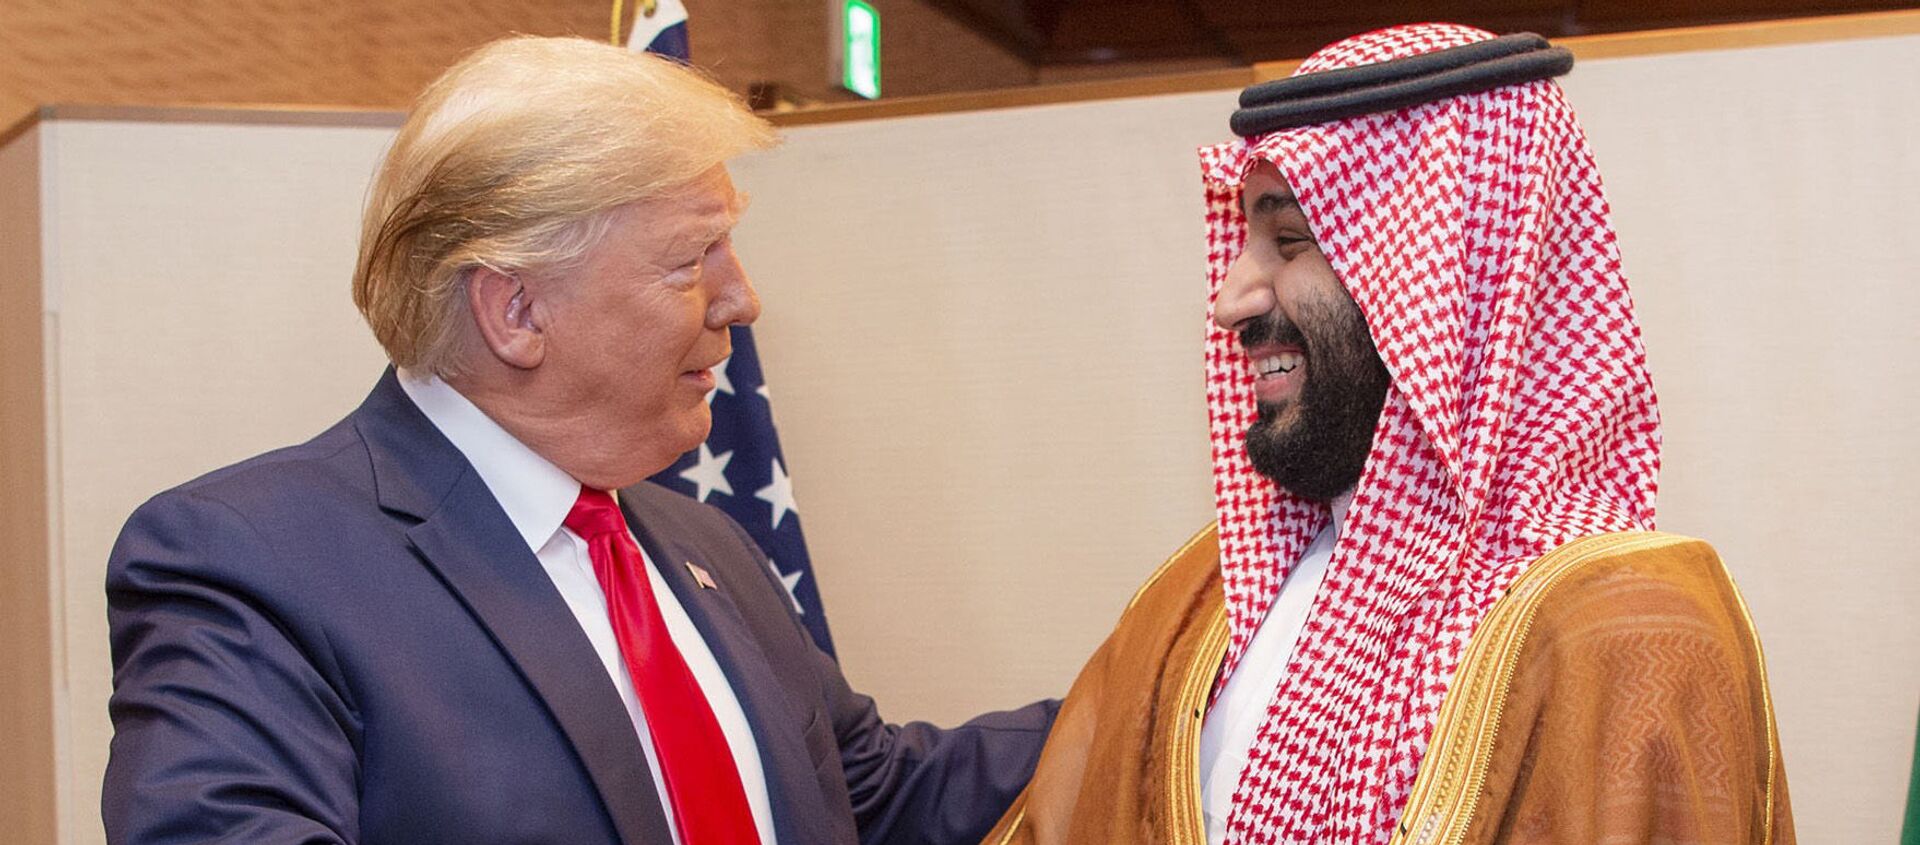 El presidente de EEUU, Donald Trump junto al príncipe heredero de Arabia Saudí, Mohammed bin Salman  - Sputnik Mundo, 1920, 10.09.2020